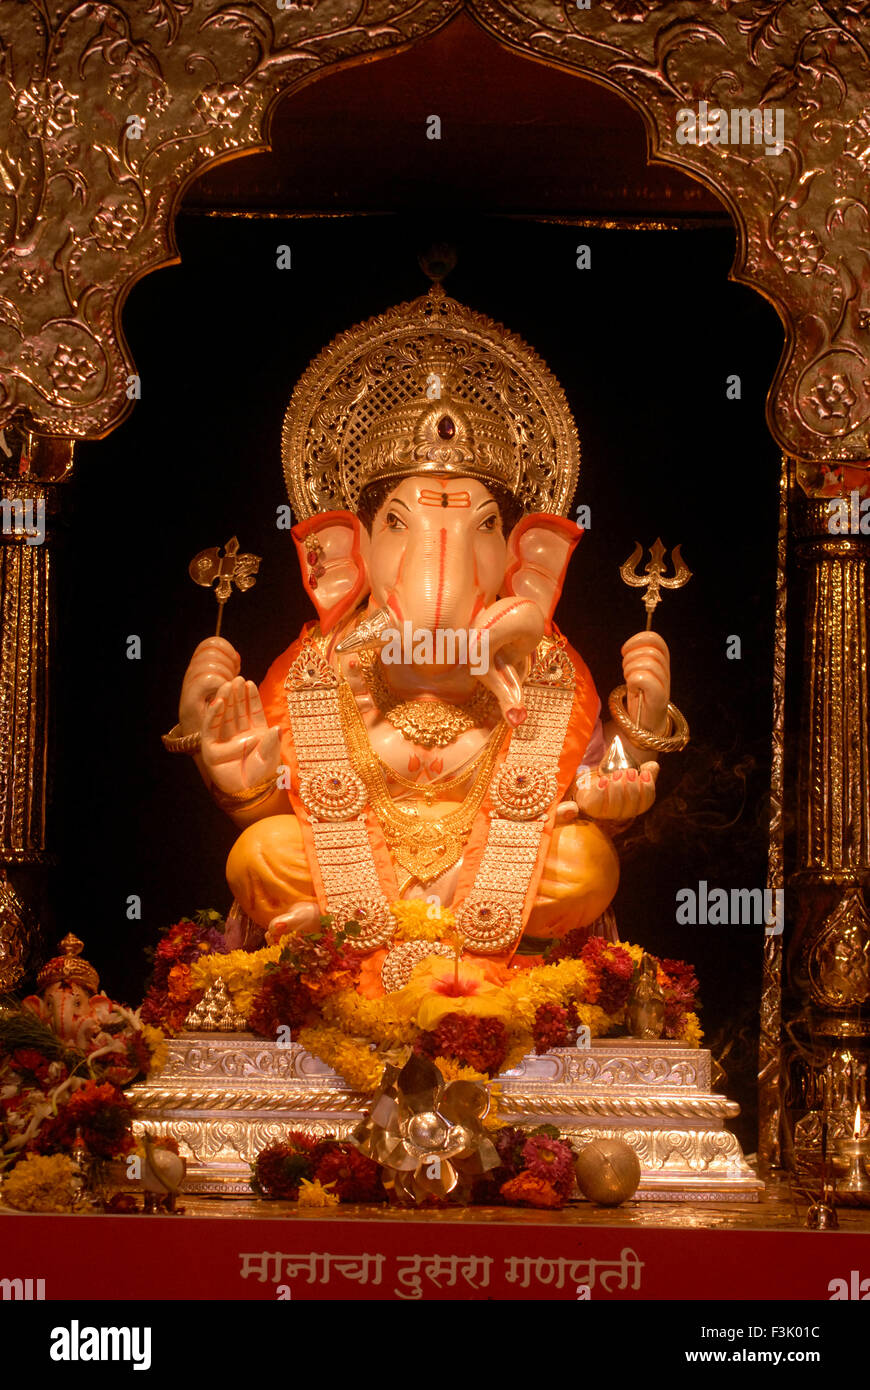 Richly decorated idol of Lord Ganesh elephant headed God of Hindu ...